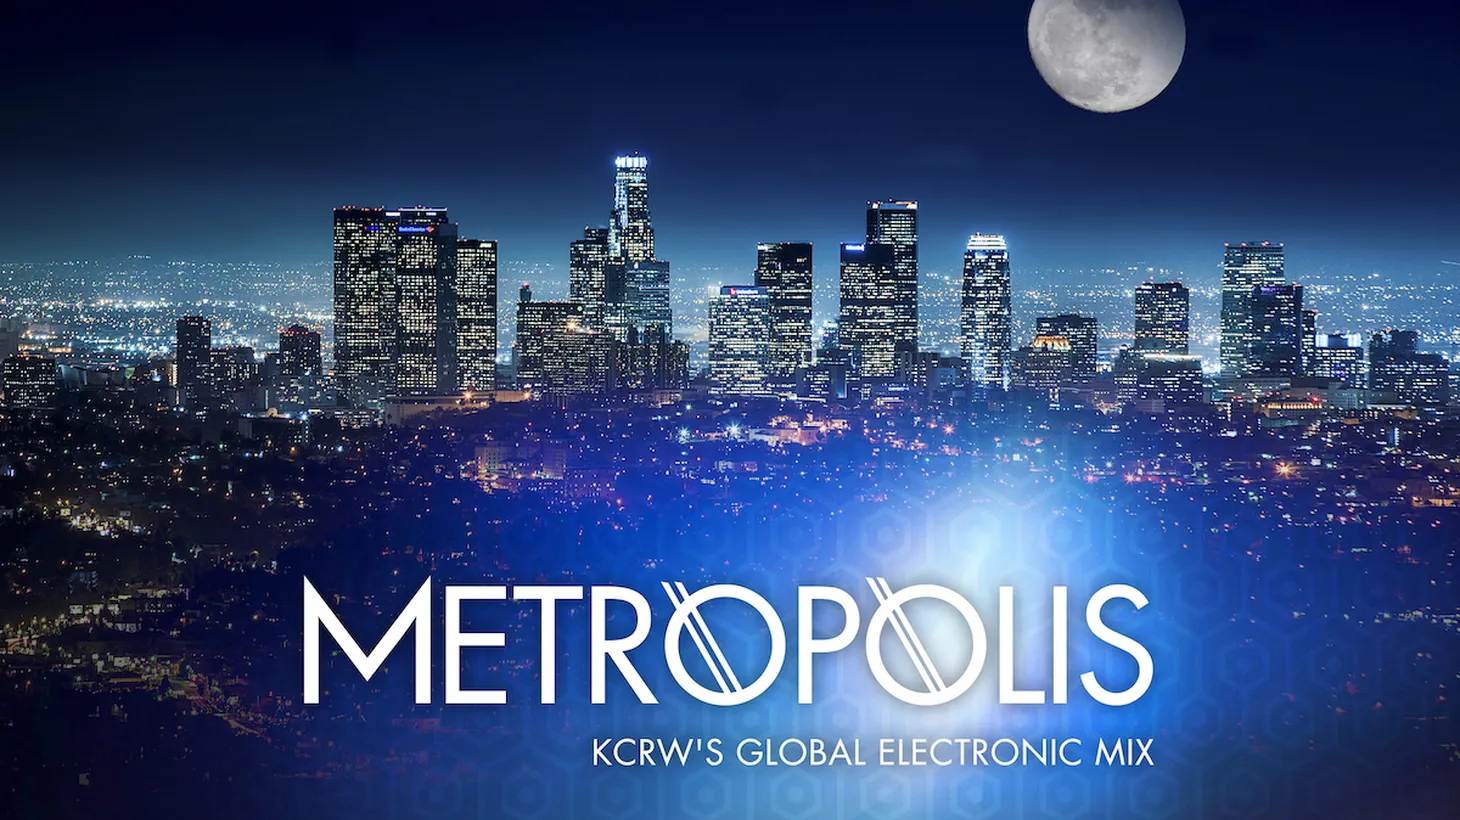 Metropolis playlist October 29, 2022.